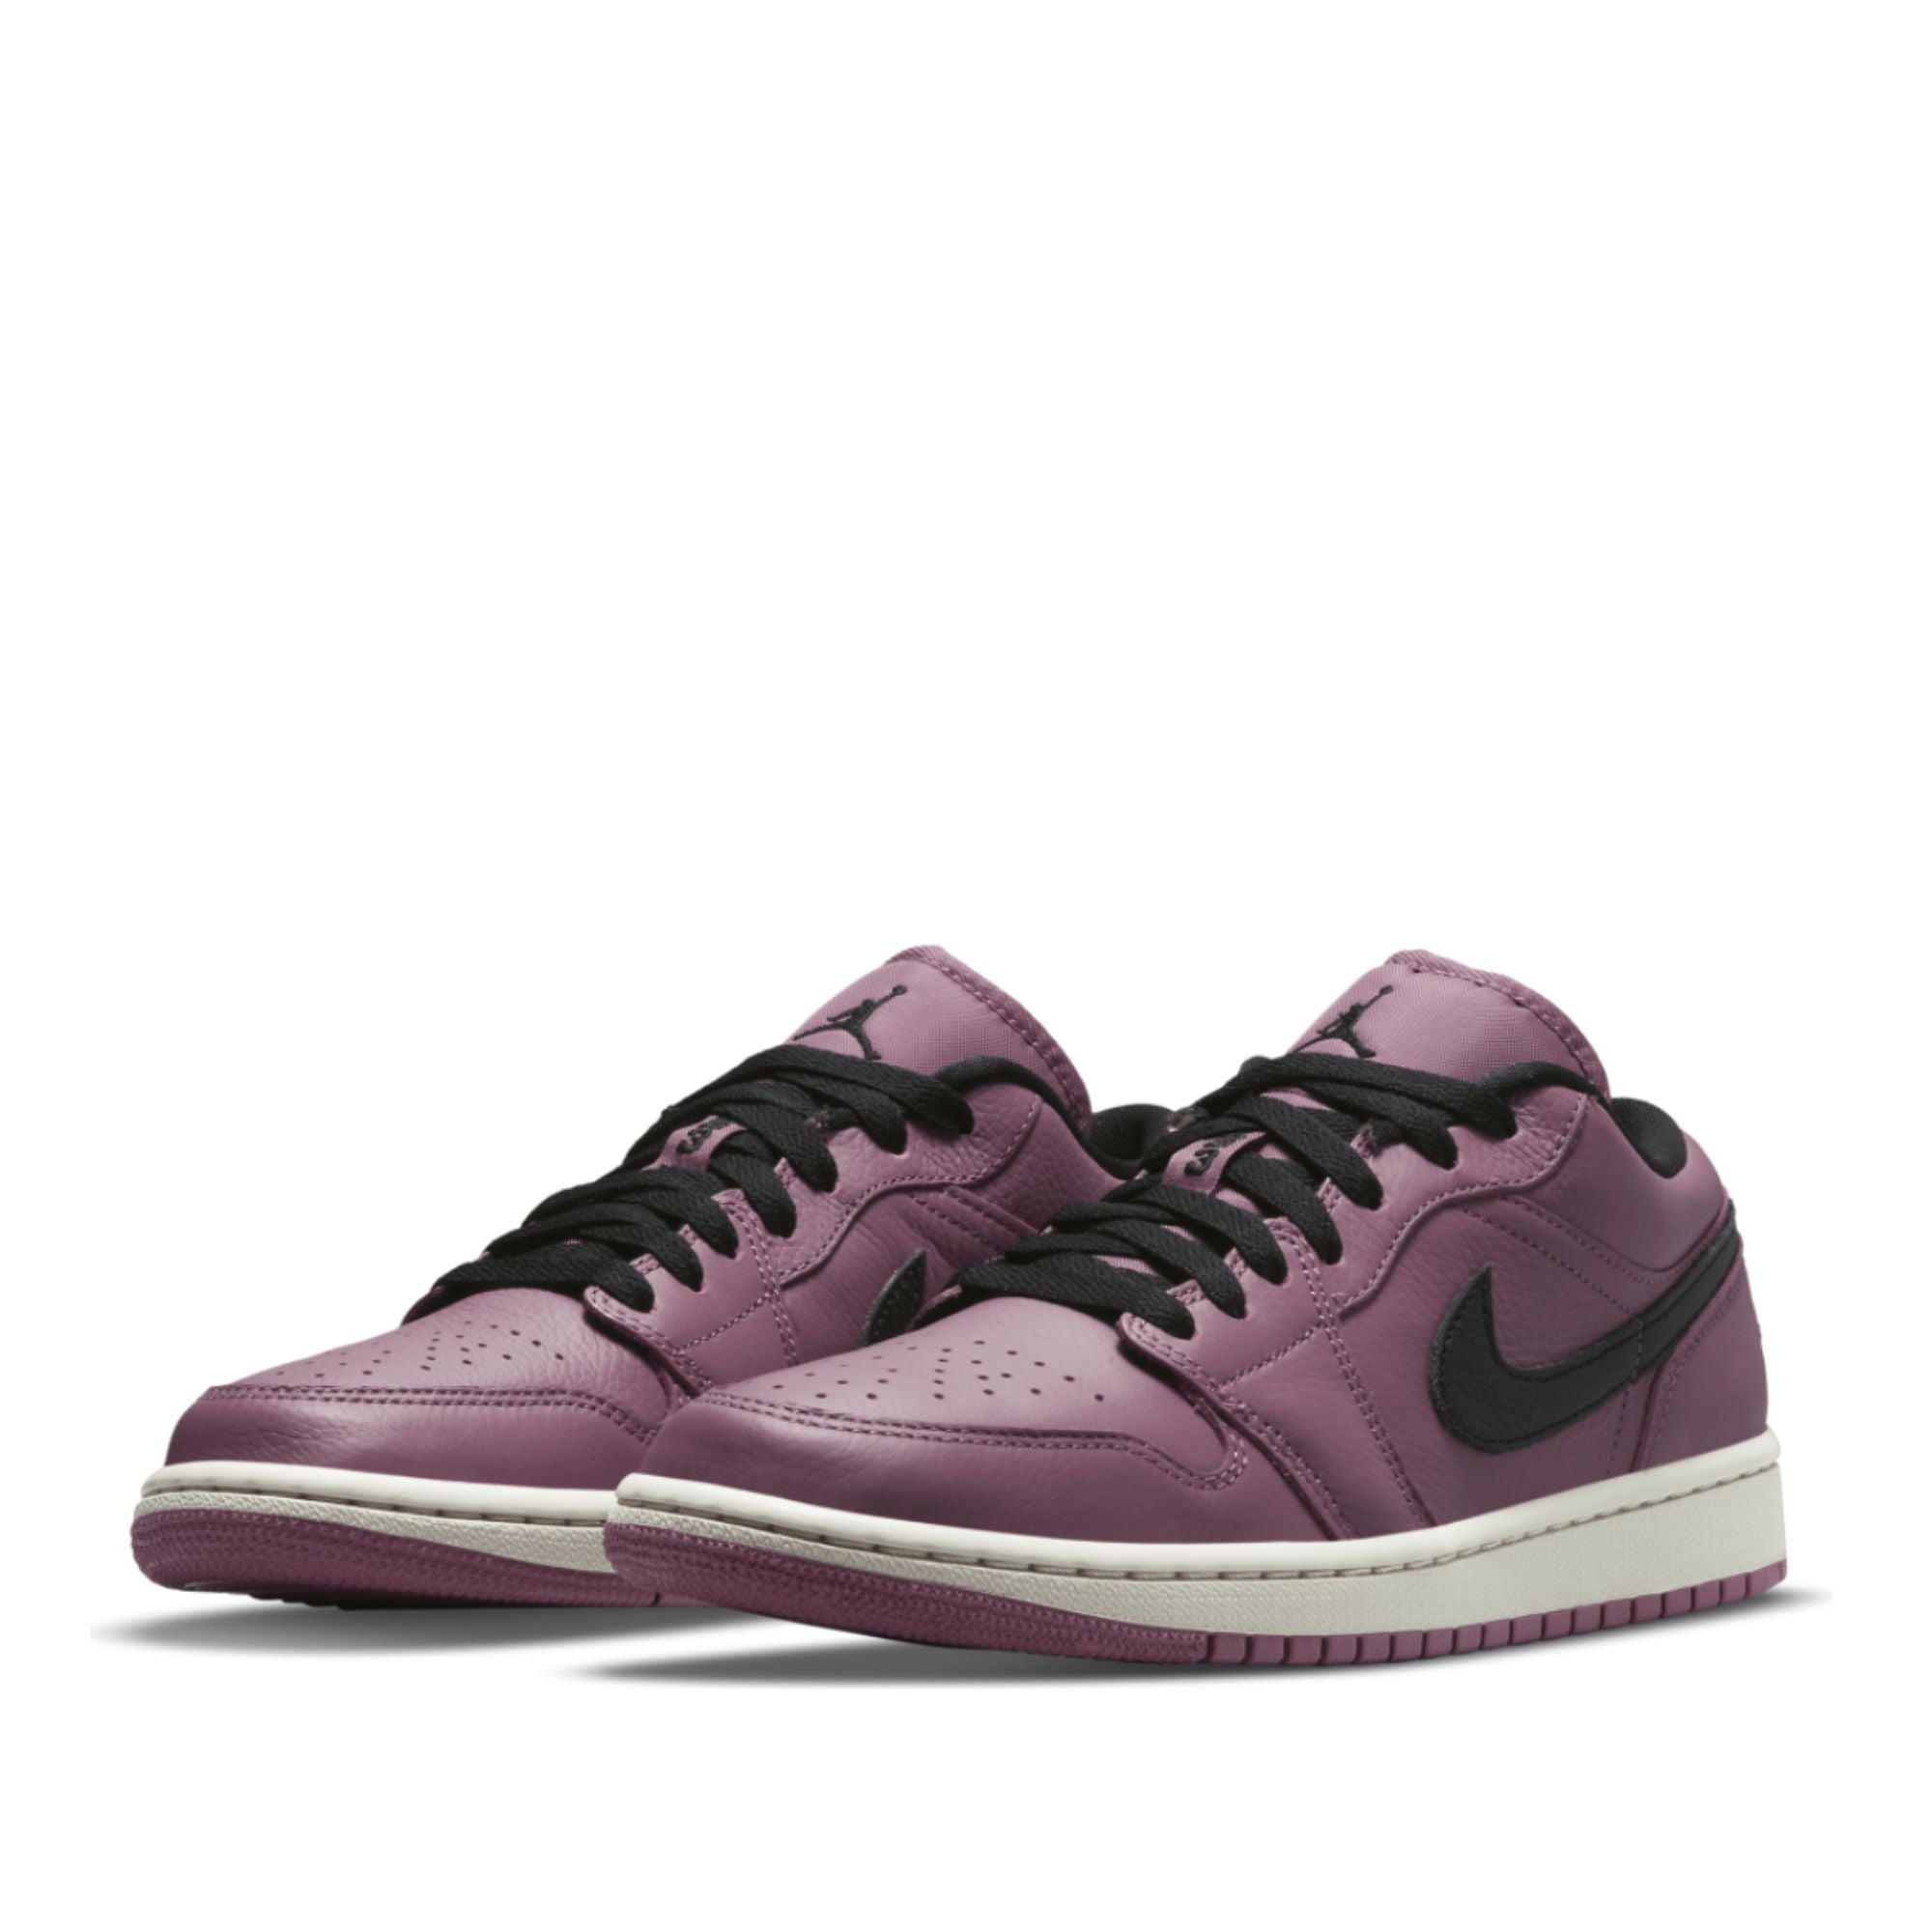 Air Jordan 1 Low ’Mulberry Purple’ M Us 5 / W 6.5 Sneakers